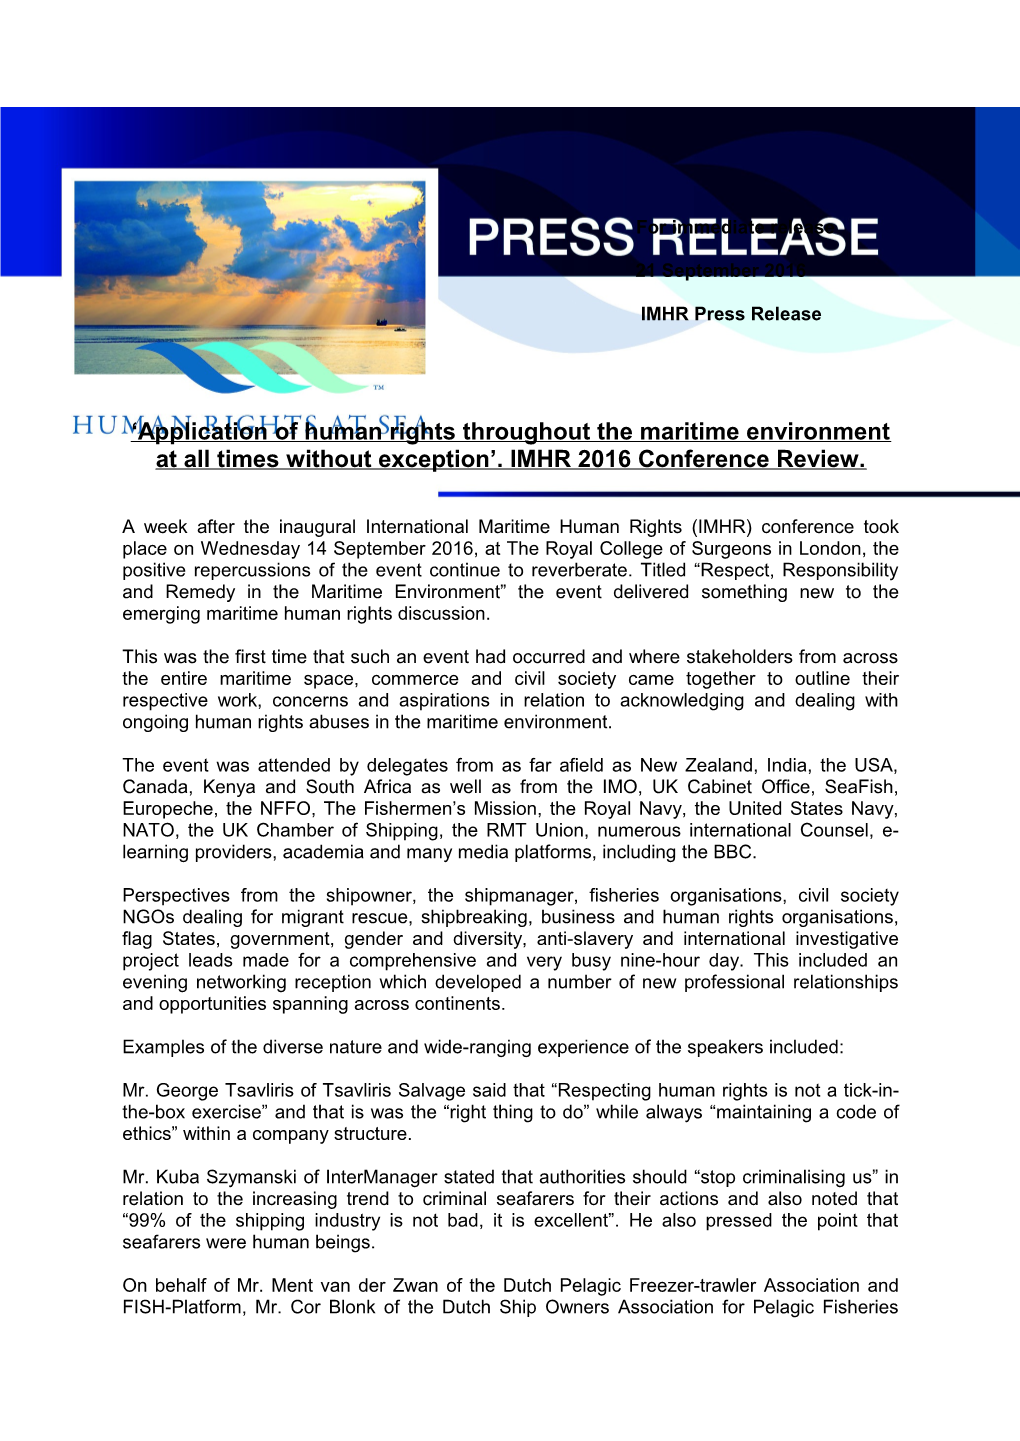 IMHR Press Release